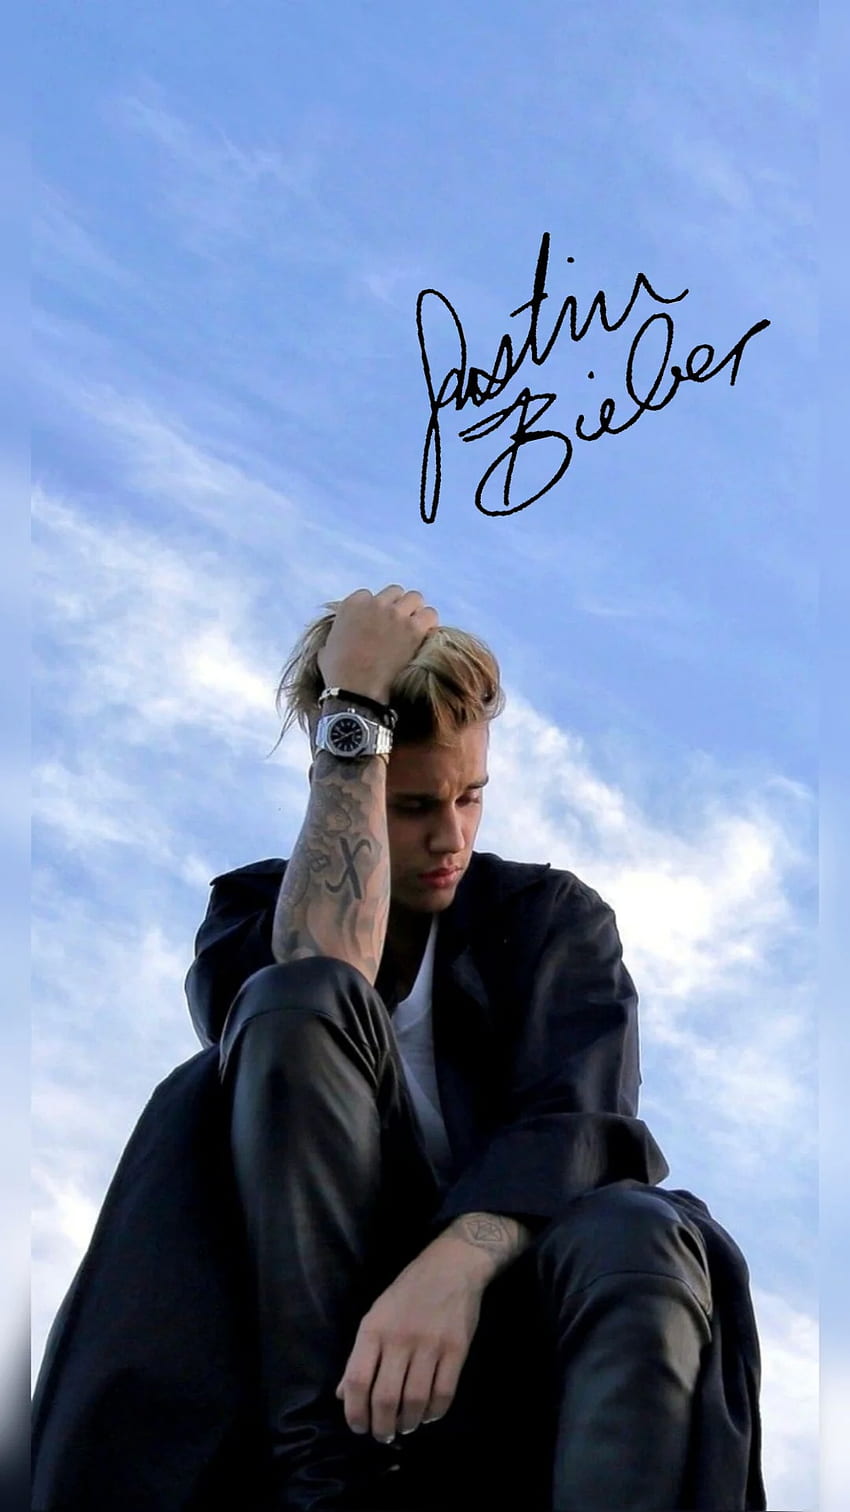 My World 20 iPhone5 Justin Bieber wallpaper by minamaged on DeviantArt